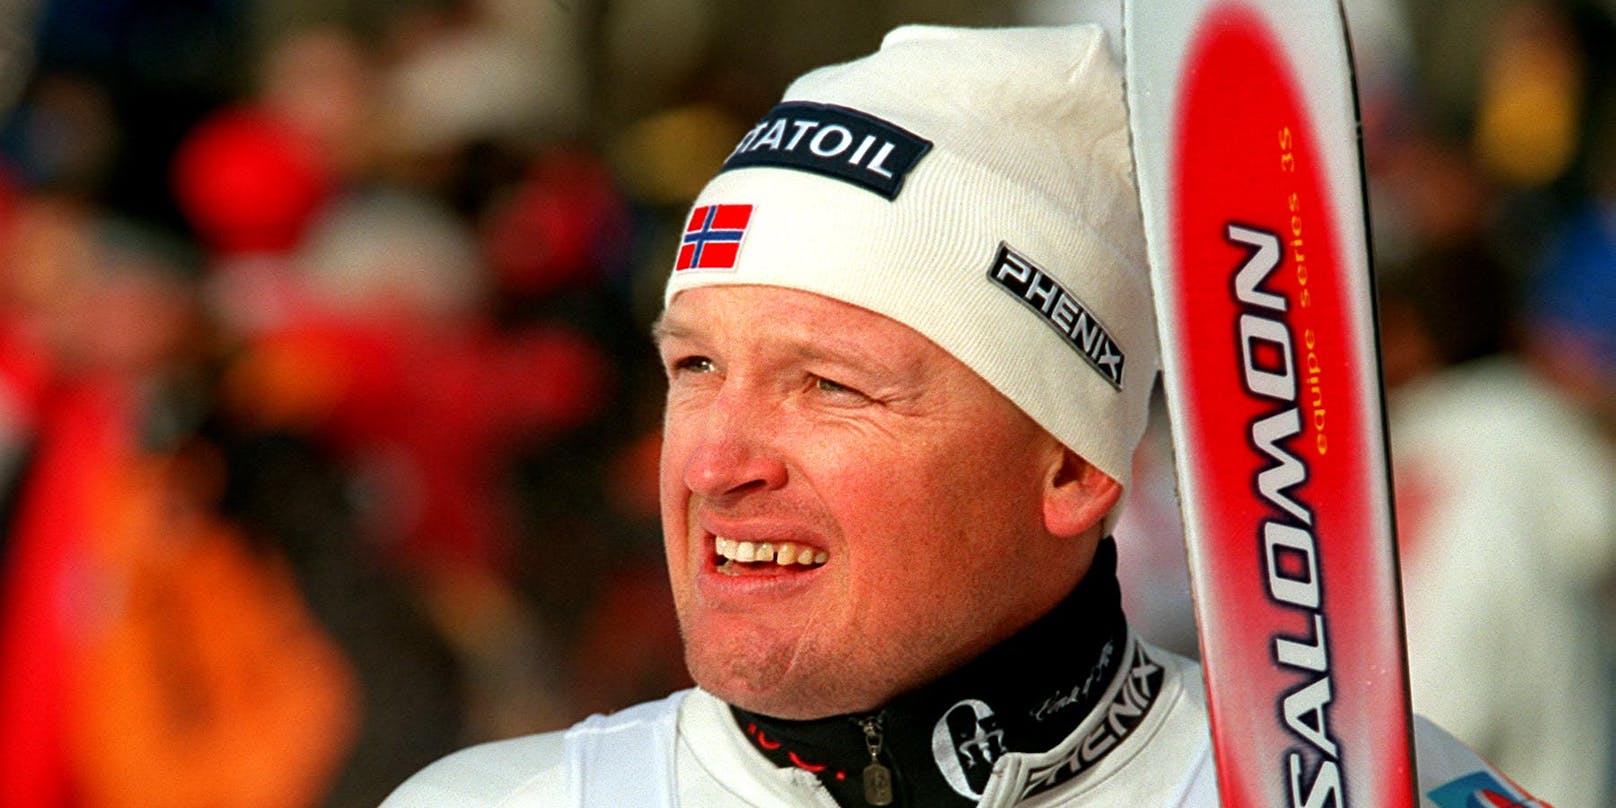 Die Ski-Welt trauert um Finn Christian Jagge. 